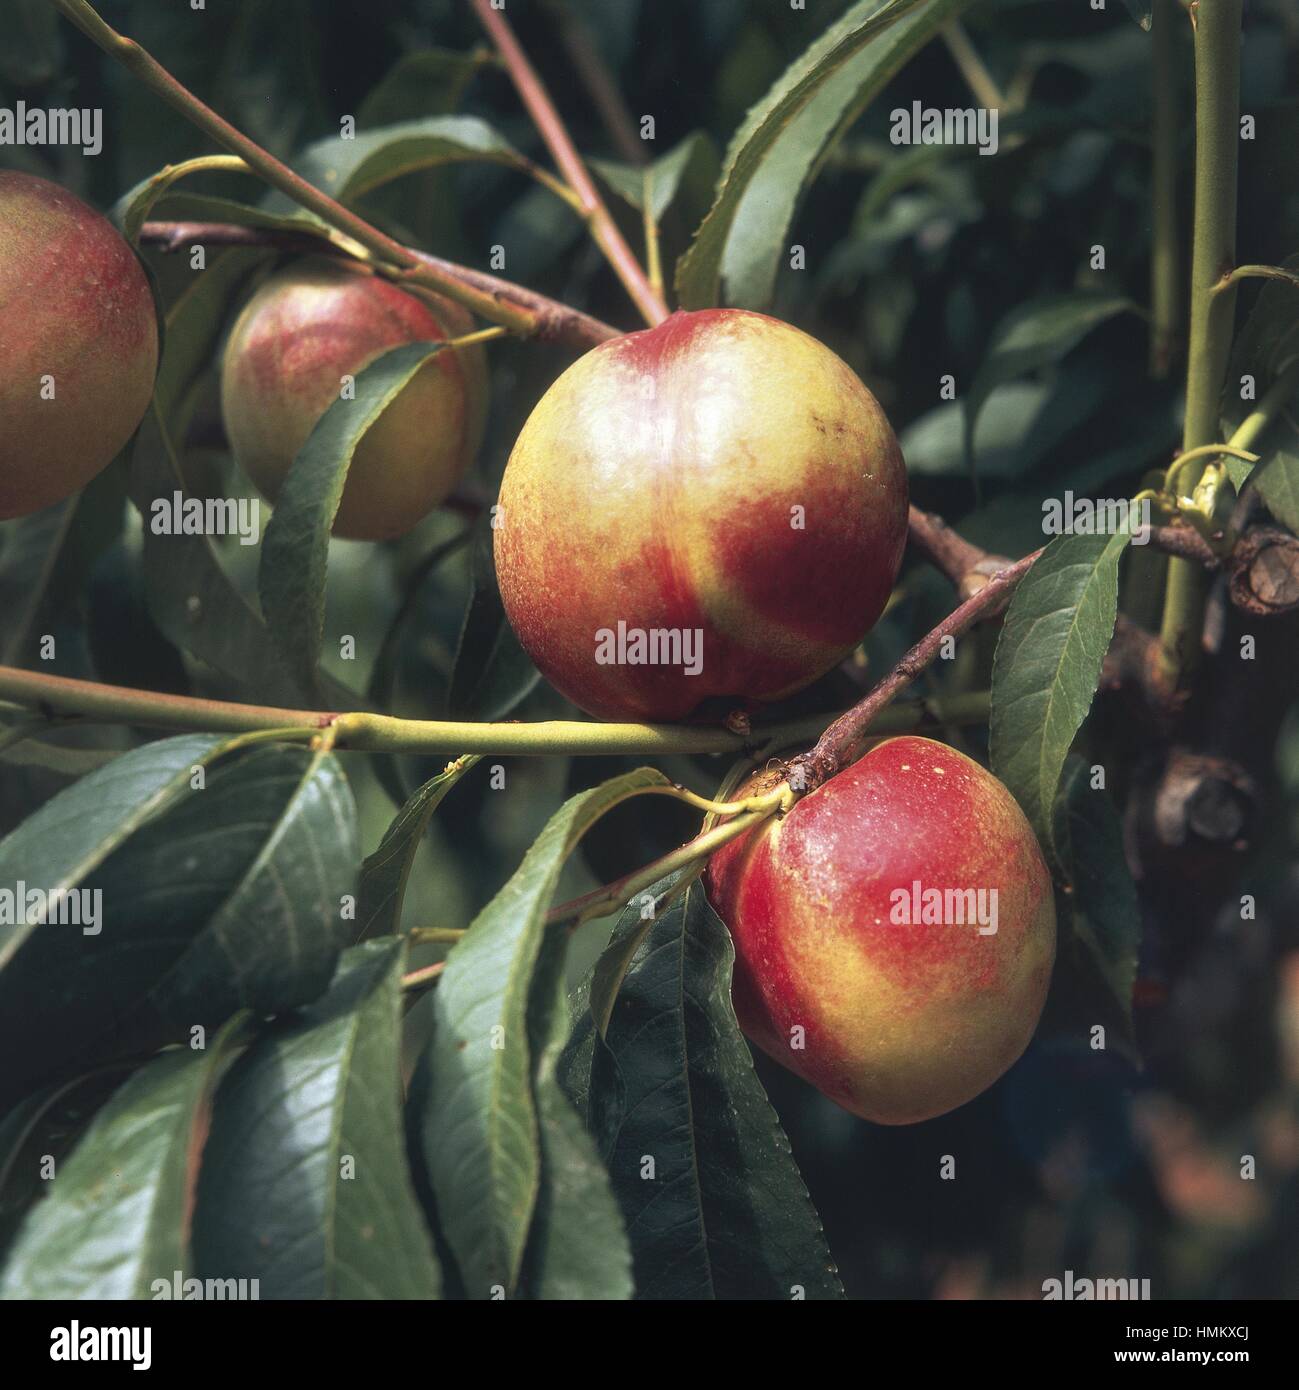 Botany - Rosaceae - Peach (Prunus persica), nectarine variety called 'Noce', close-up of fruit Stock Photo